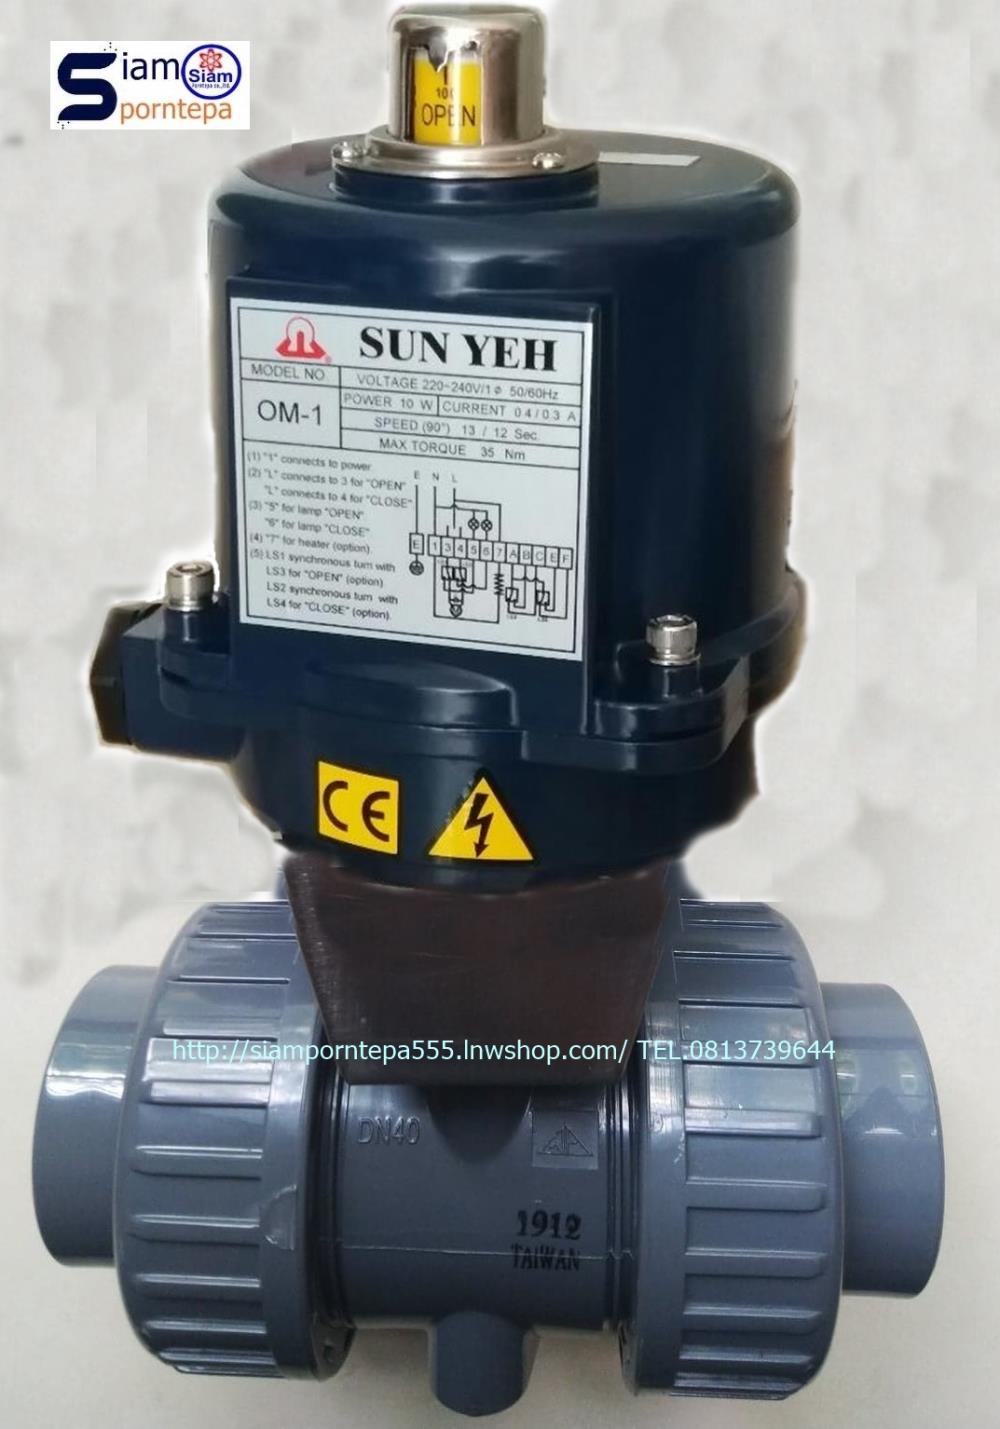 UPVC valve 1" Sunyeh electric actuator หัวขับไฟฟ้า size 1" ให้งานร่วมกับ Actuator ทนทาน ใช้งานคุ้ม ส่งฟรีทั่วประเทศ,UPVC valve 1" Sunyeh electric actuator หัวขับไฟฟ้า size 1",UPVC valve 1" ,Sunyeh electric actuator หัวขับไฟฟ้า size 1",UPVC valve Sunyeh electric actuator,Pumps, Valves and Accessories/Valves/Butterfly Valves